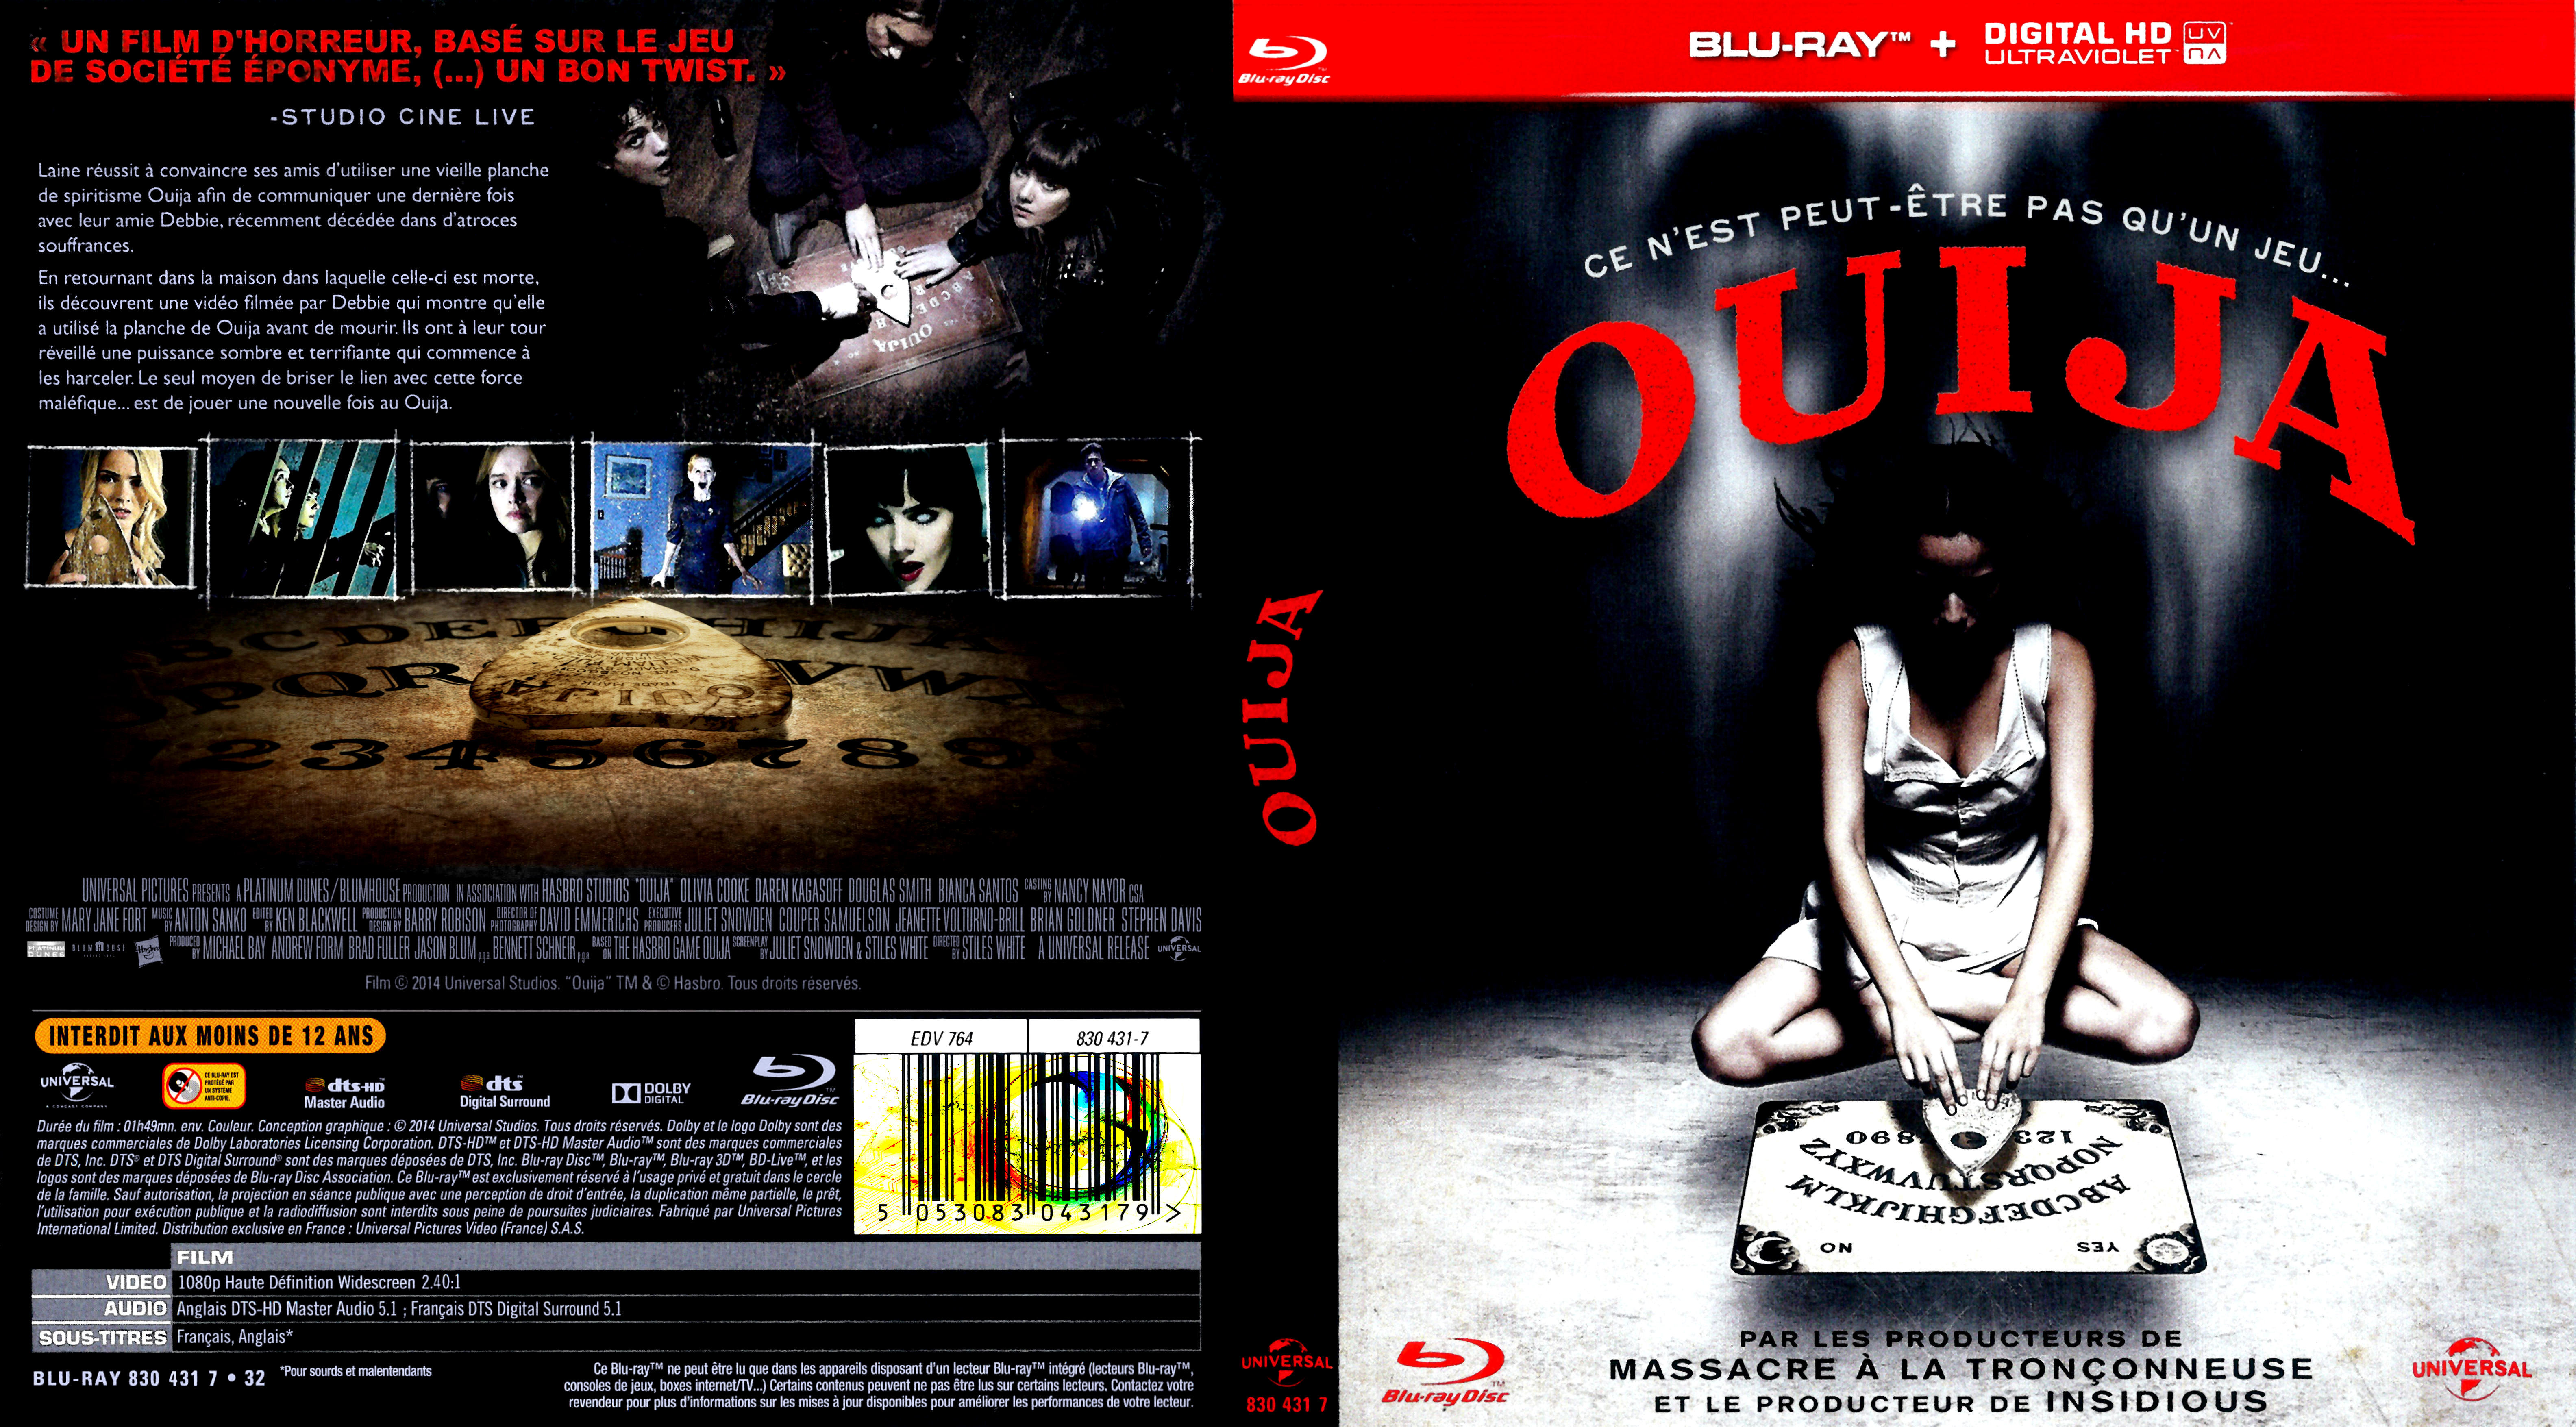 Jaquette DVD Ouija (BLU-RAY) v2